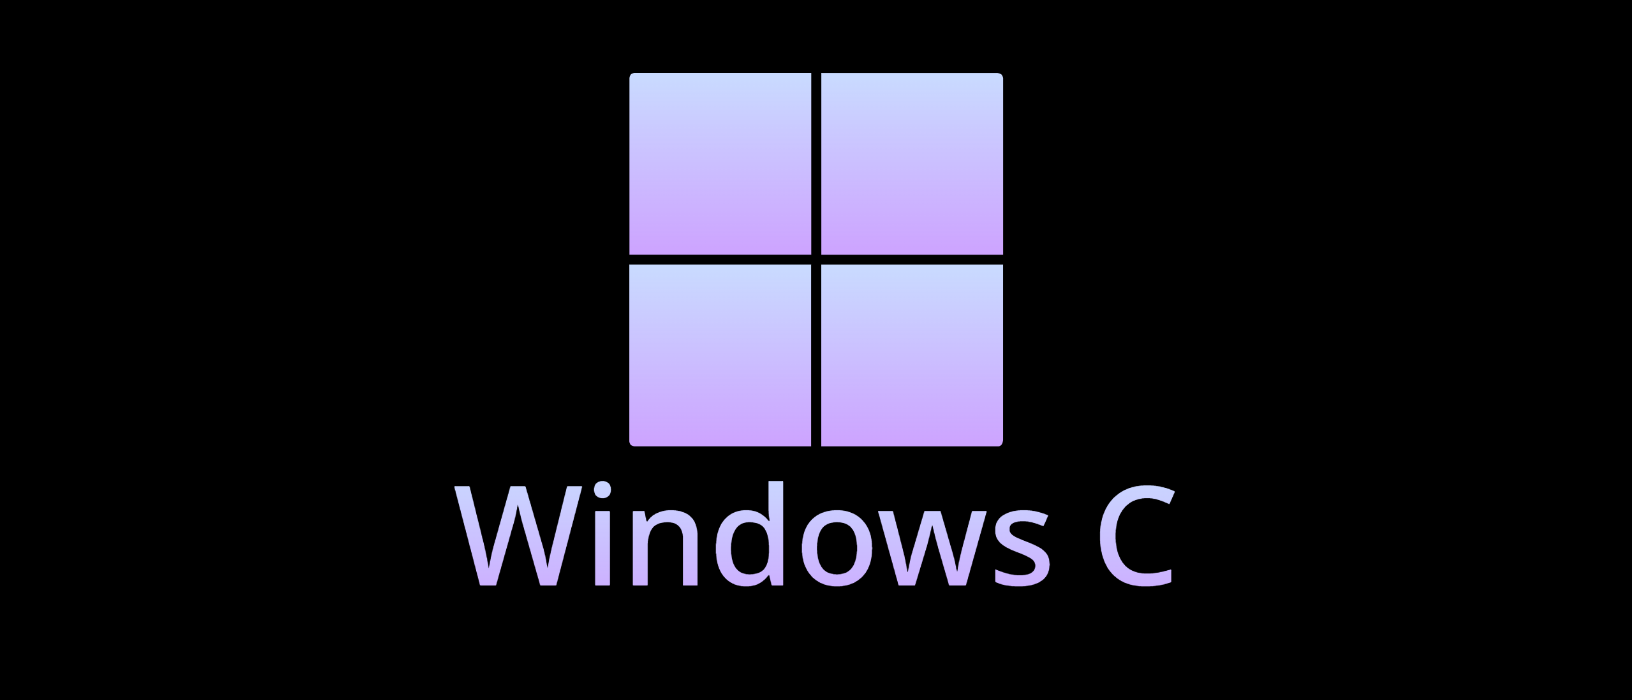 Windows C (MS-DOS Test)